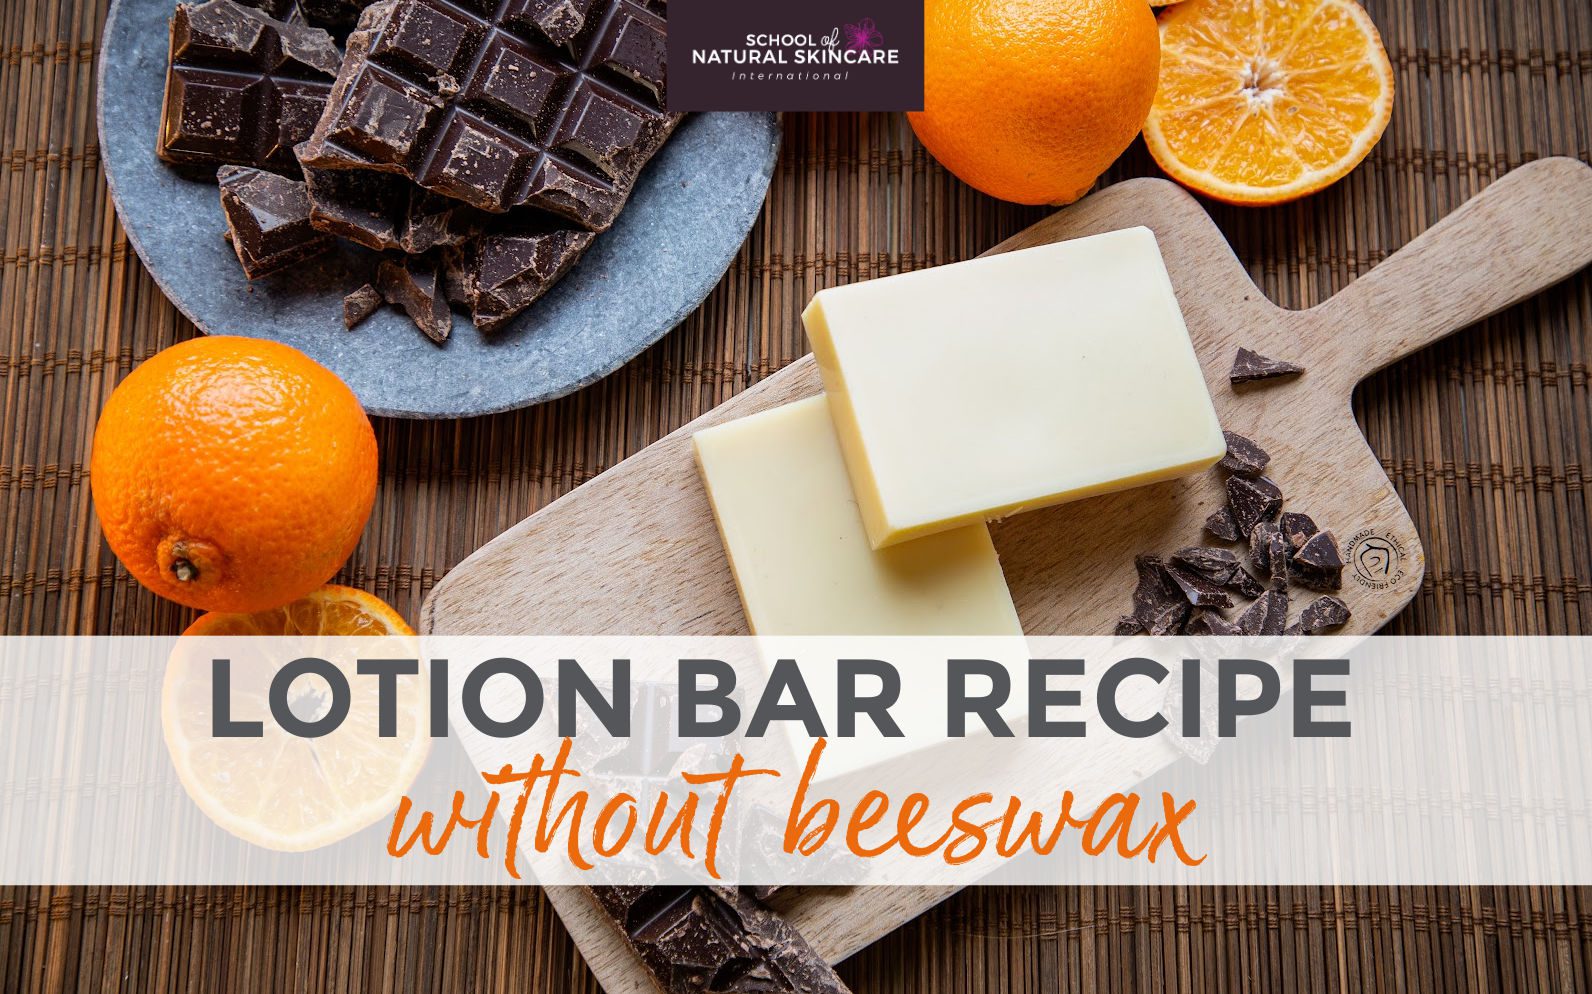 Beeswax Lotion Bar Recipe